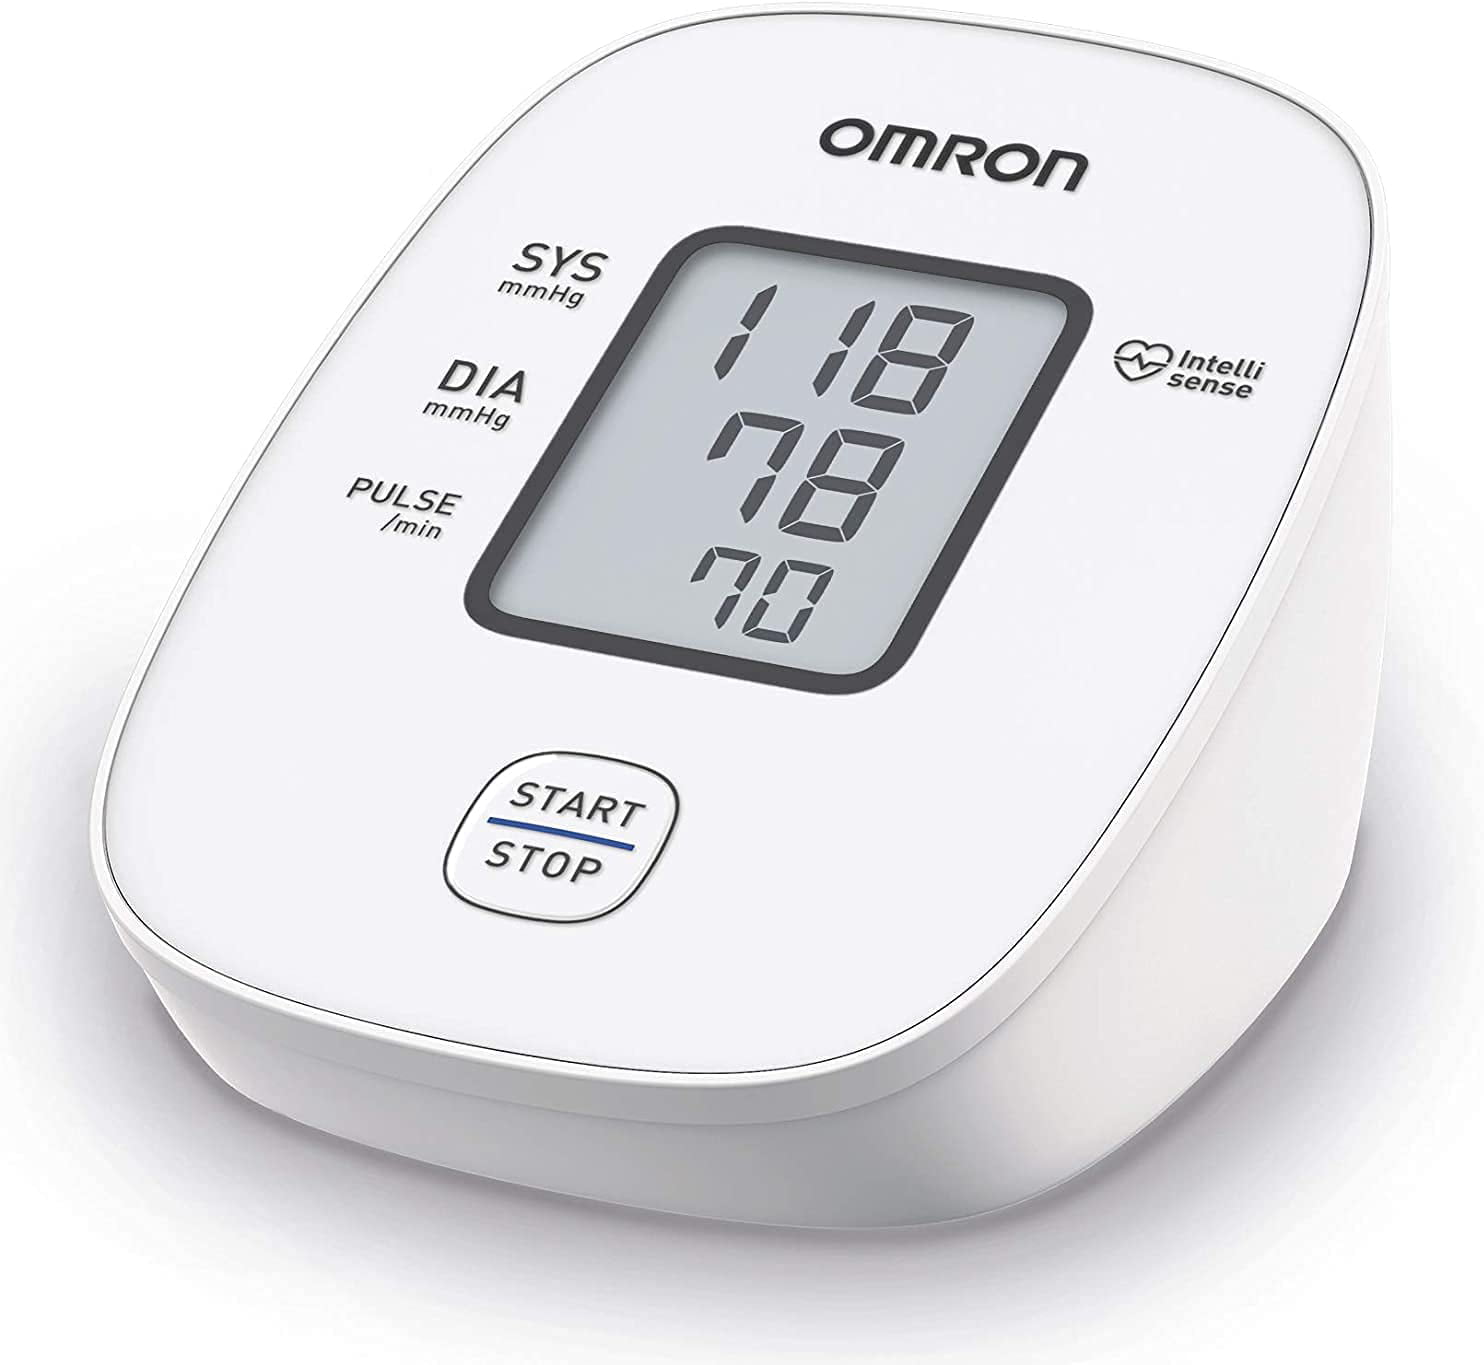 Omron M2 Basic Automatic Upper Arm Blood Pressure Monitor (HEM-7121J)